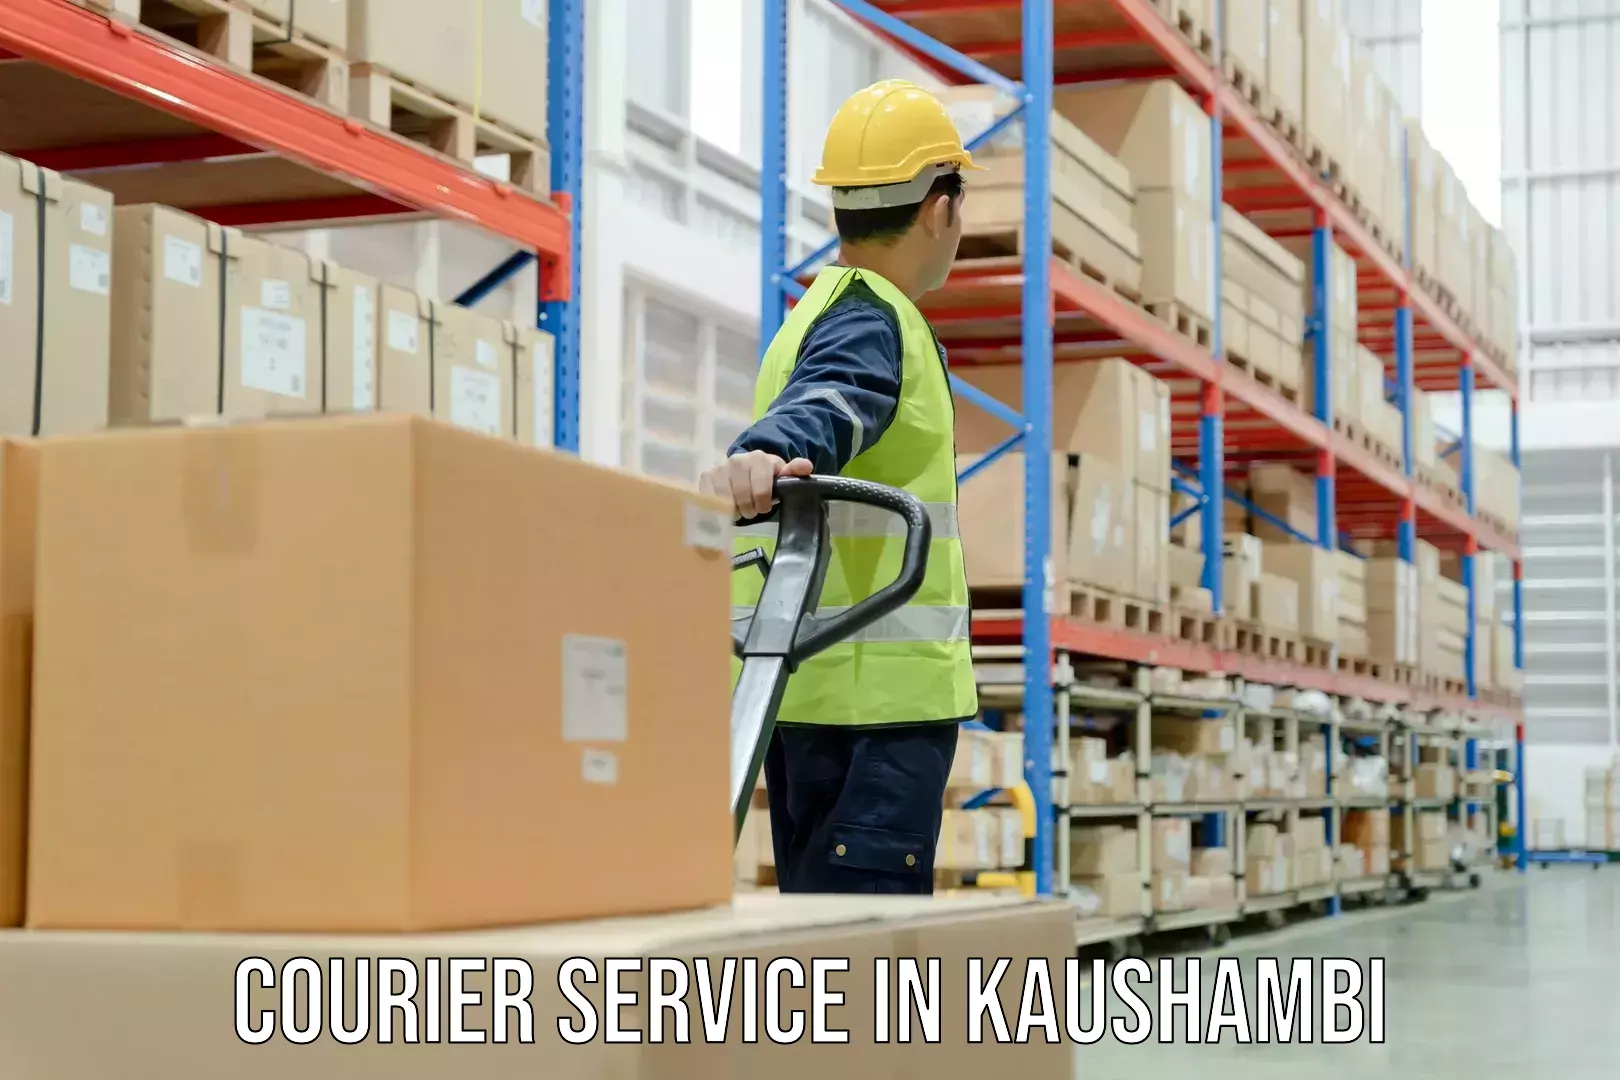 Logistics and distribution in Kaushambi